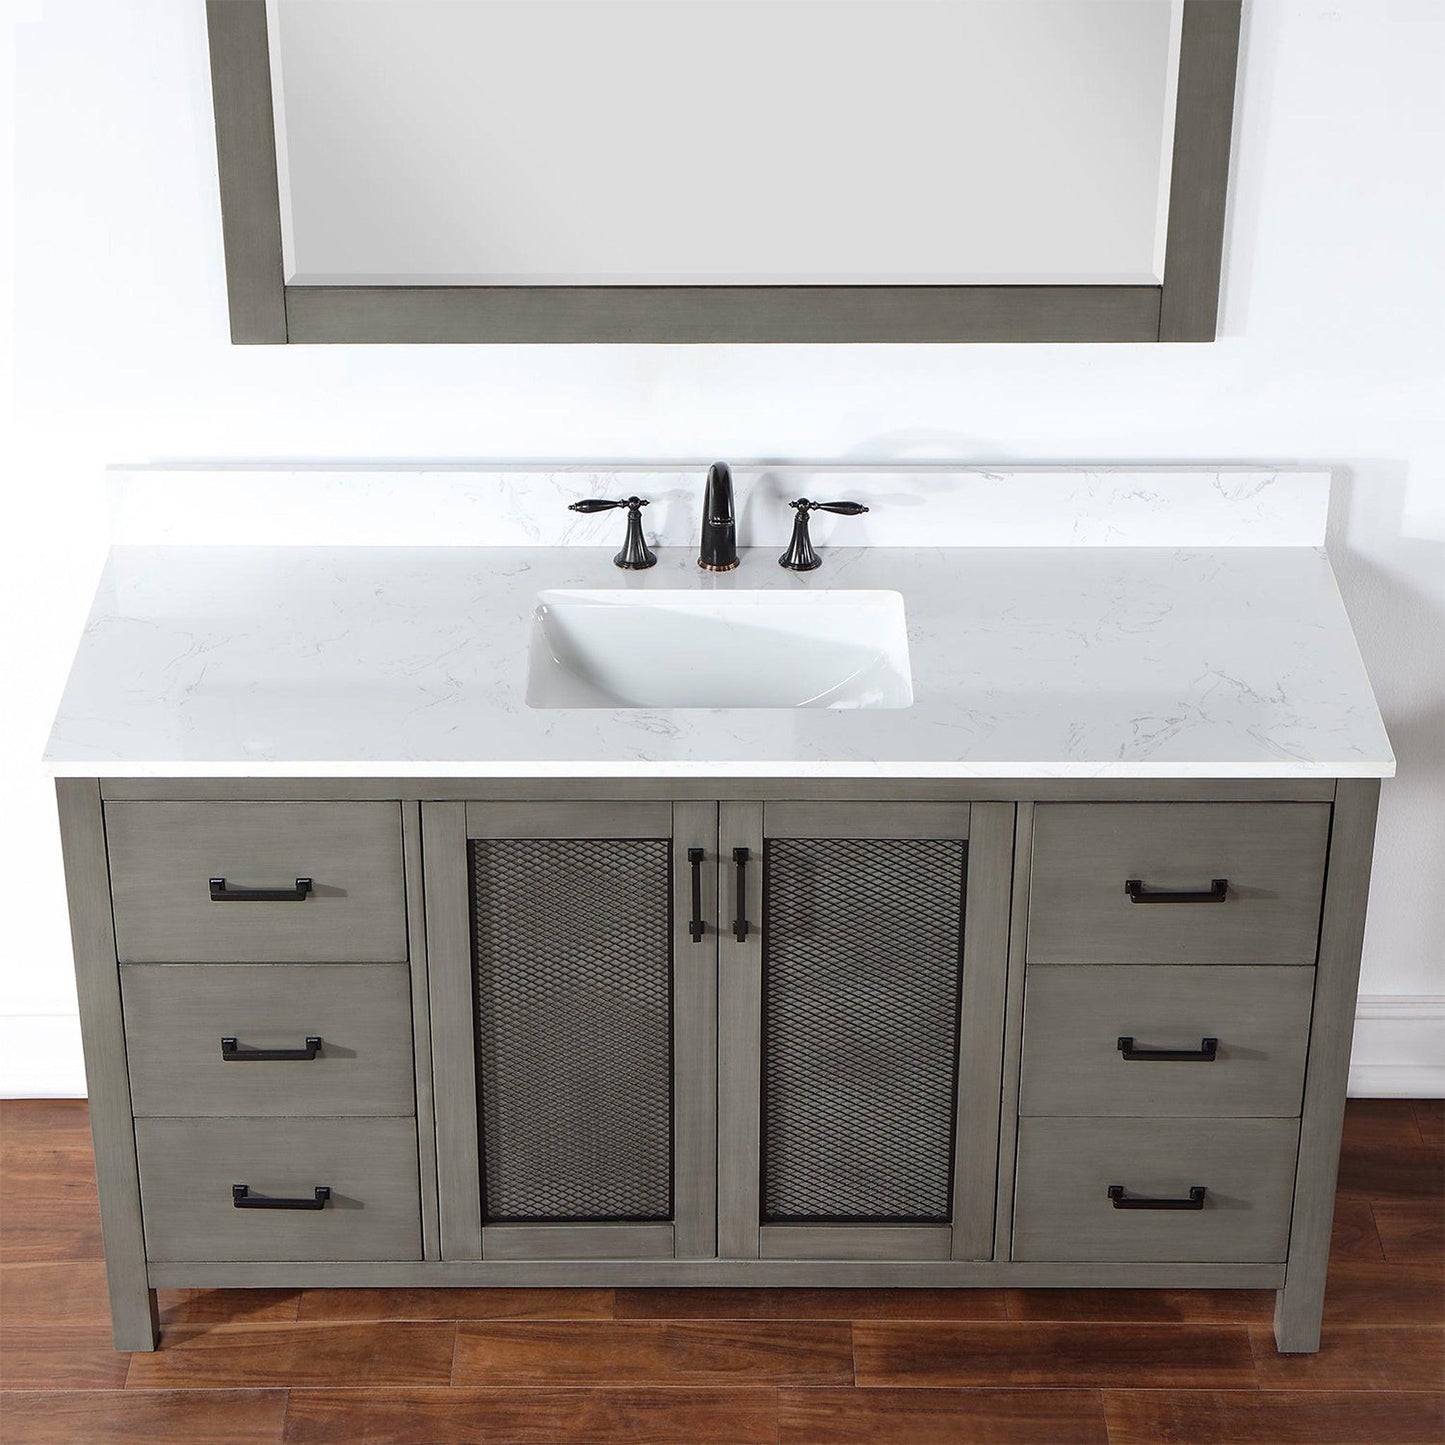 Altair Hadiya 60" Single Gray Pine Freestanding Bathroom Vanity Set With Mirror, Elegant Aosta White Composite Stone Top, Rectangular Undermount Ceramic Sink, Overflow, and Backsplash